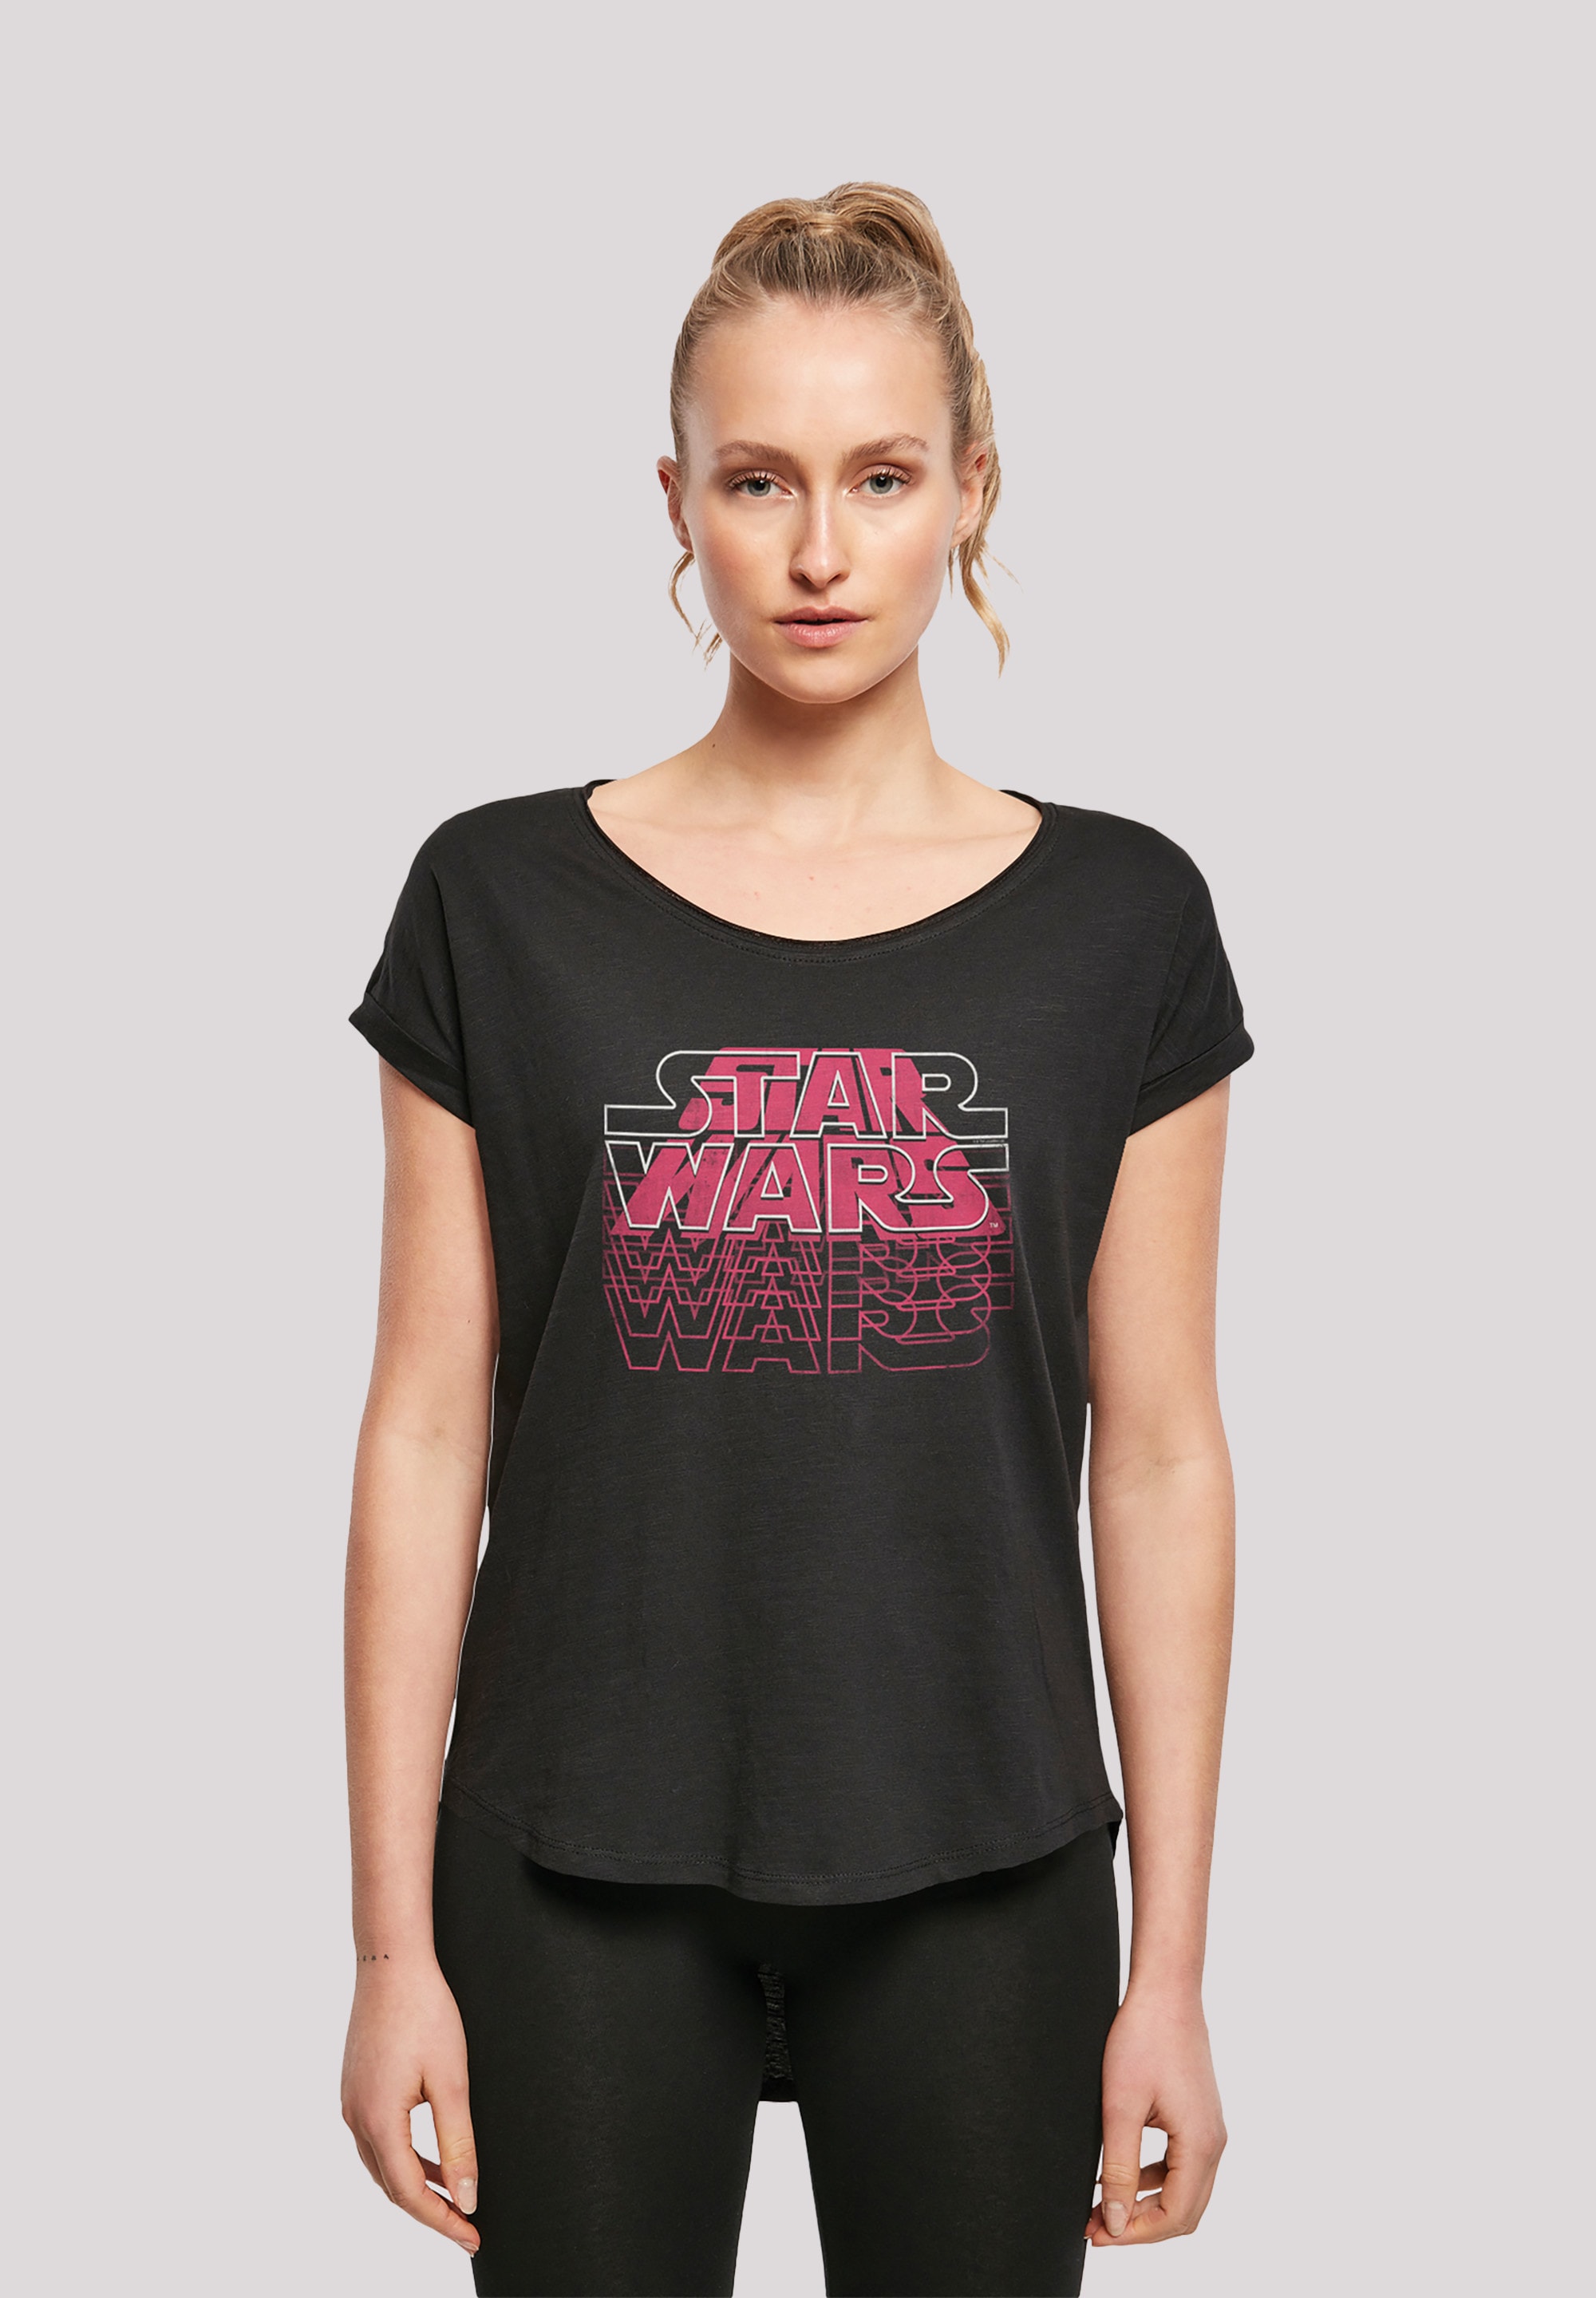 Blended der Print walking - Wars F4NT4STIC bestellen »Star T-Shirt Sterne«, Krieg Logo I\'m Premium |